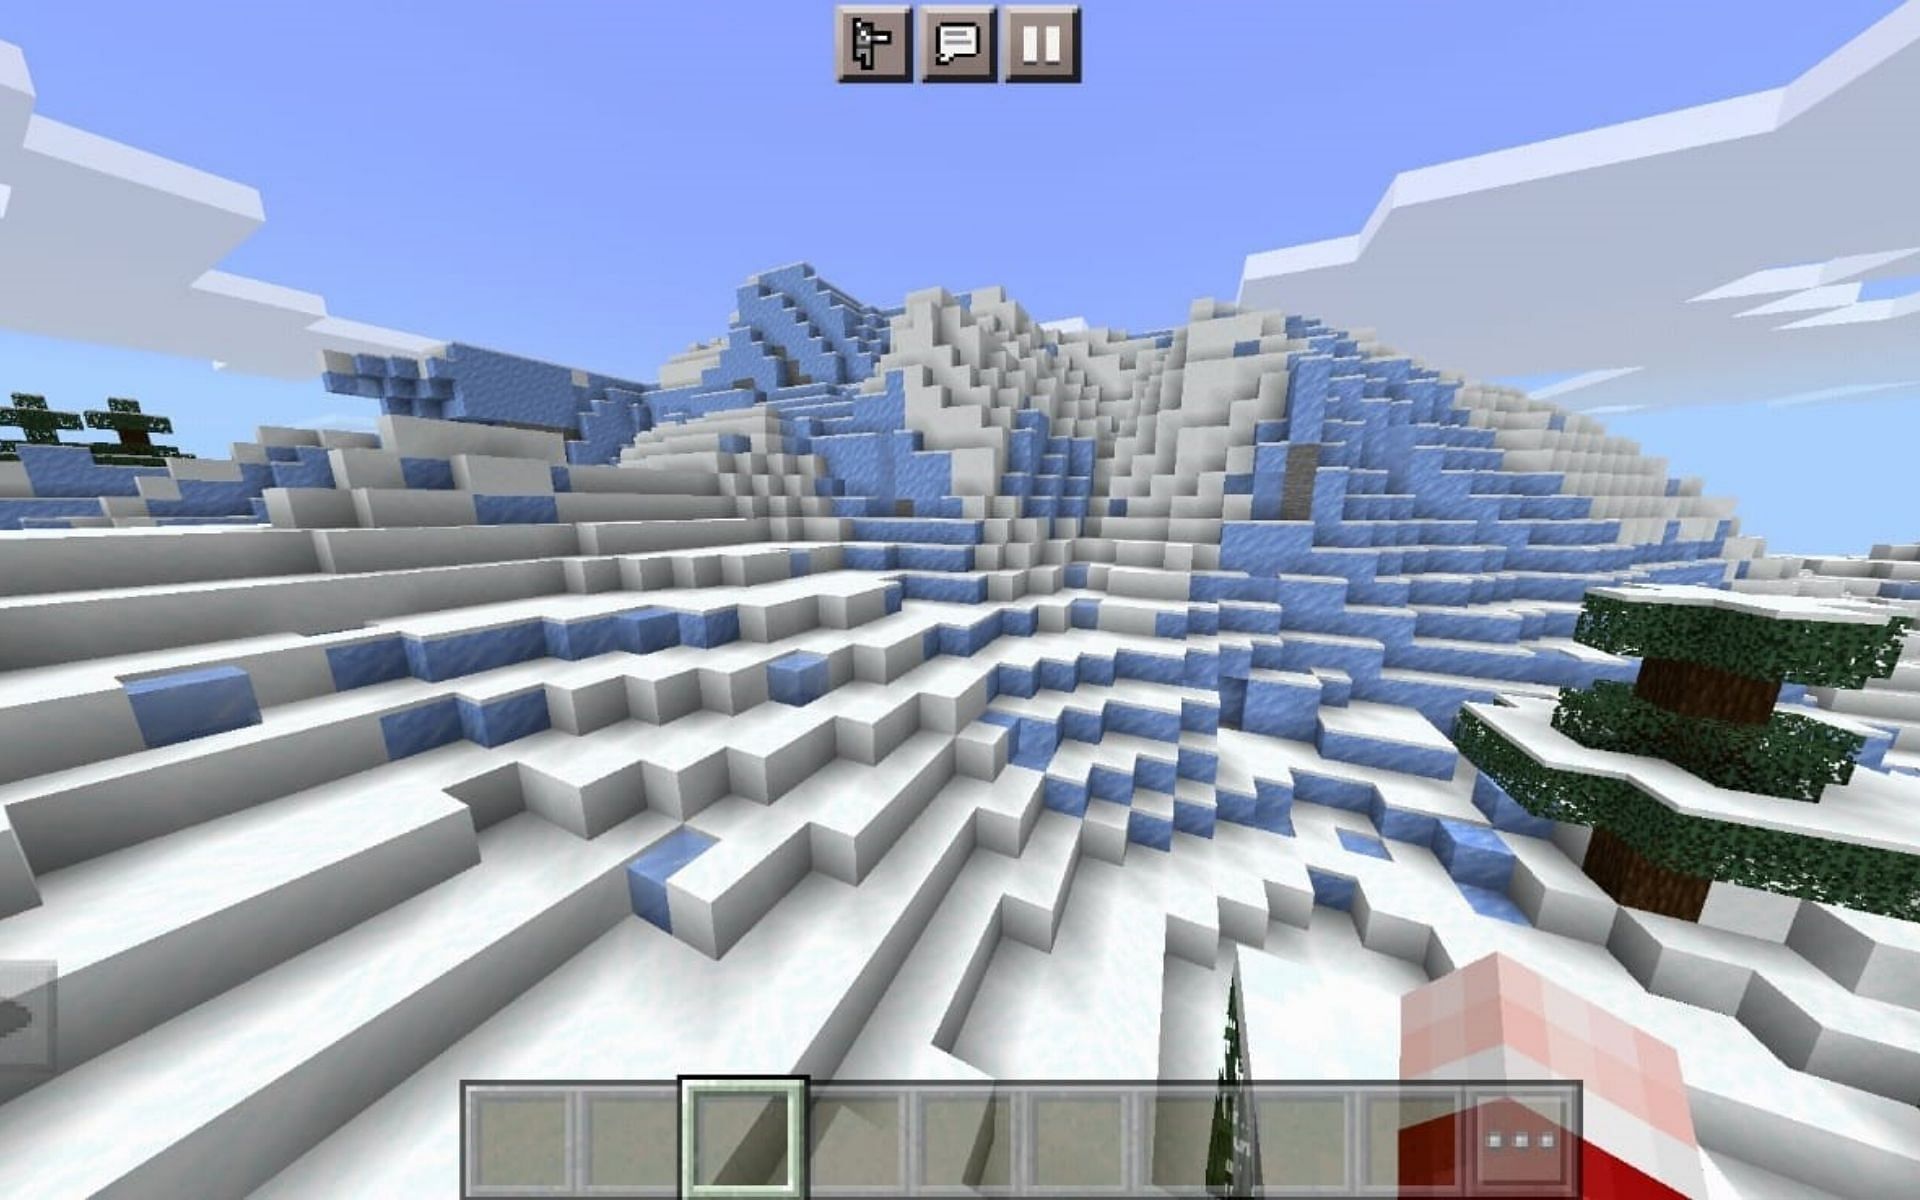 Frozen Peaks (Image via Minecraft)